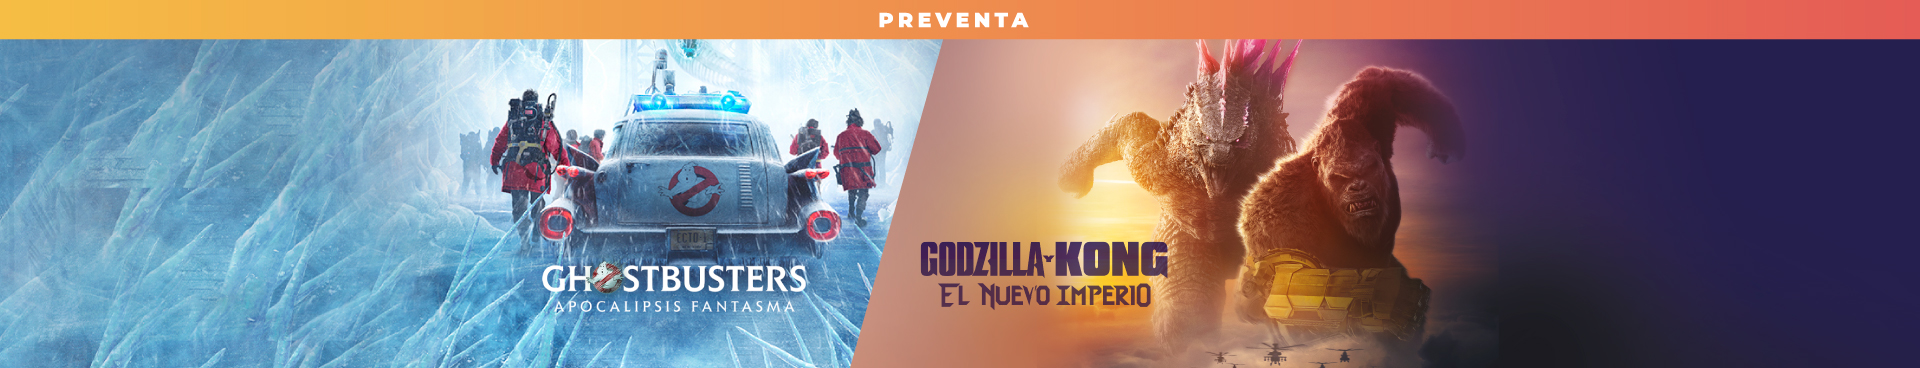 Preventas Ghostbusters / Godzilla